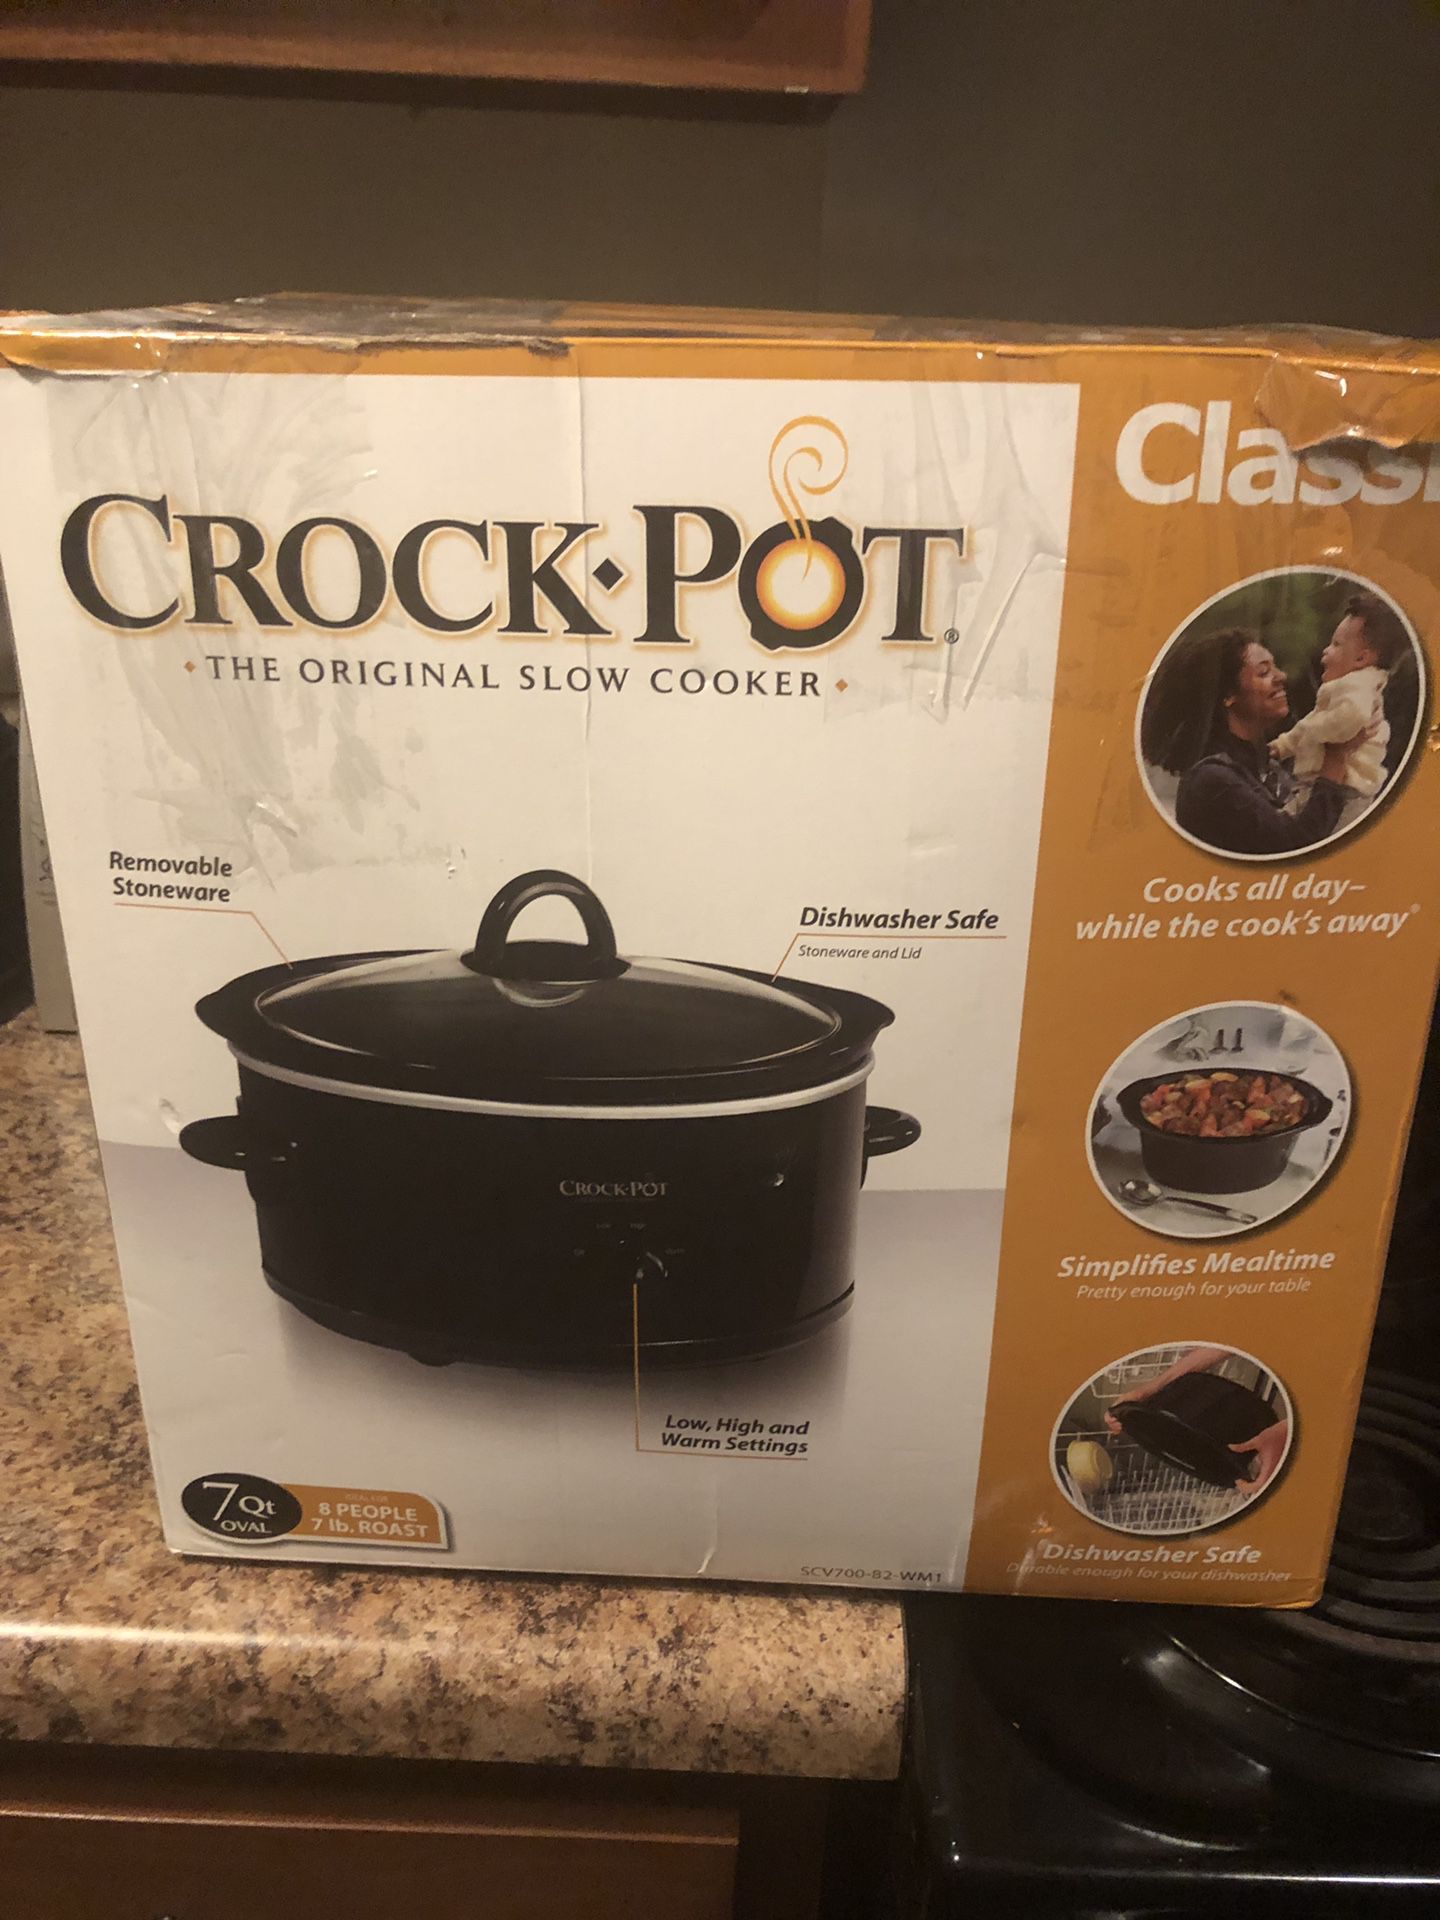 Crock pot 7 arts used once $15